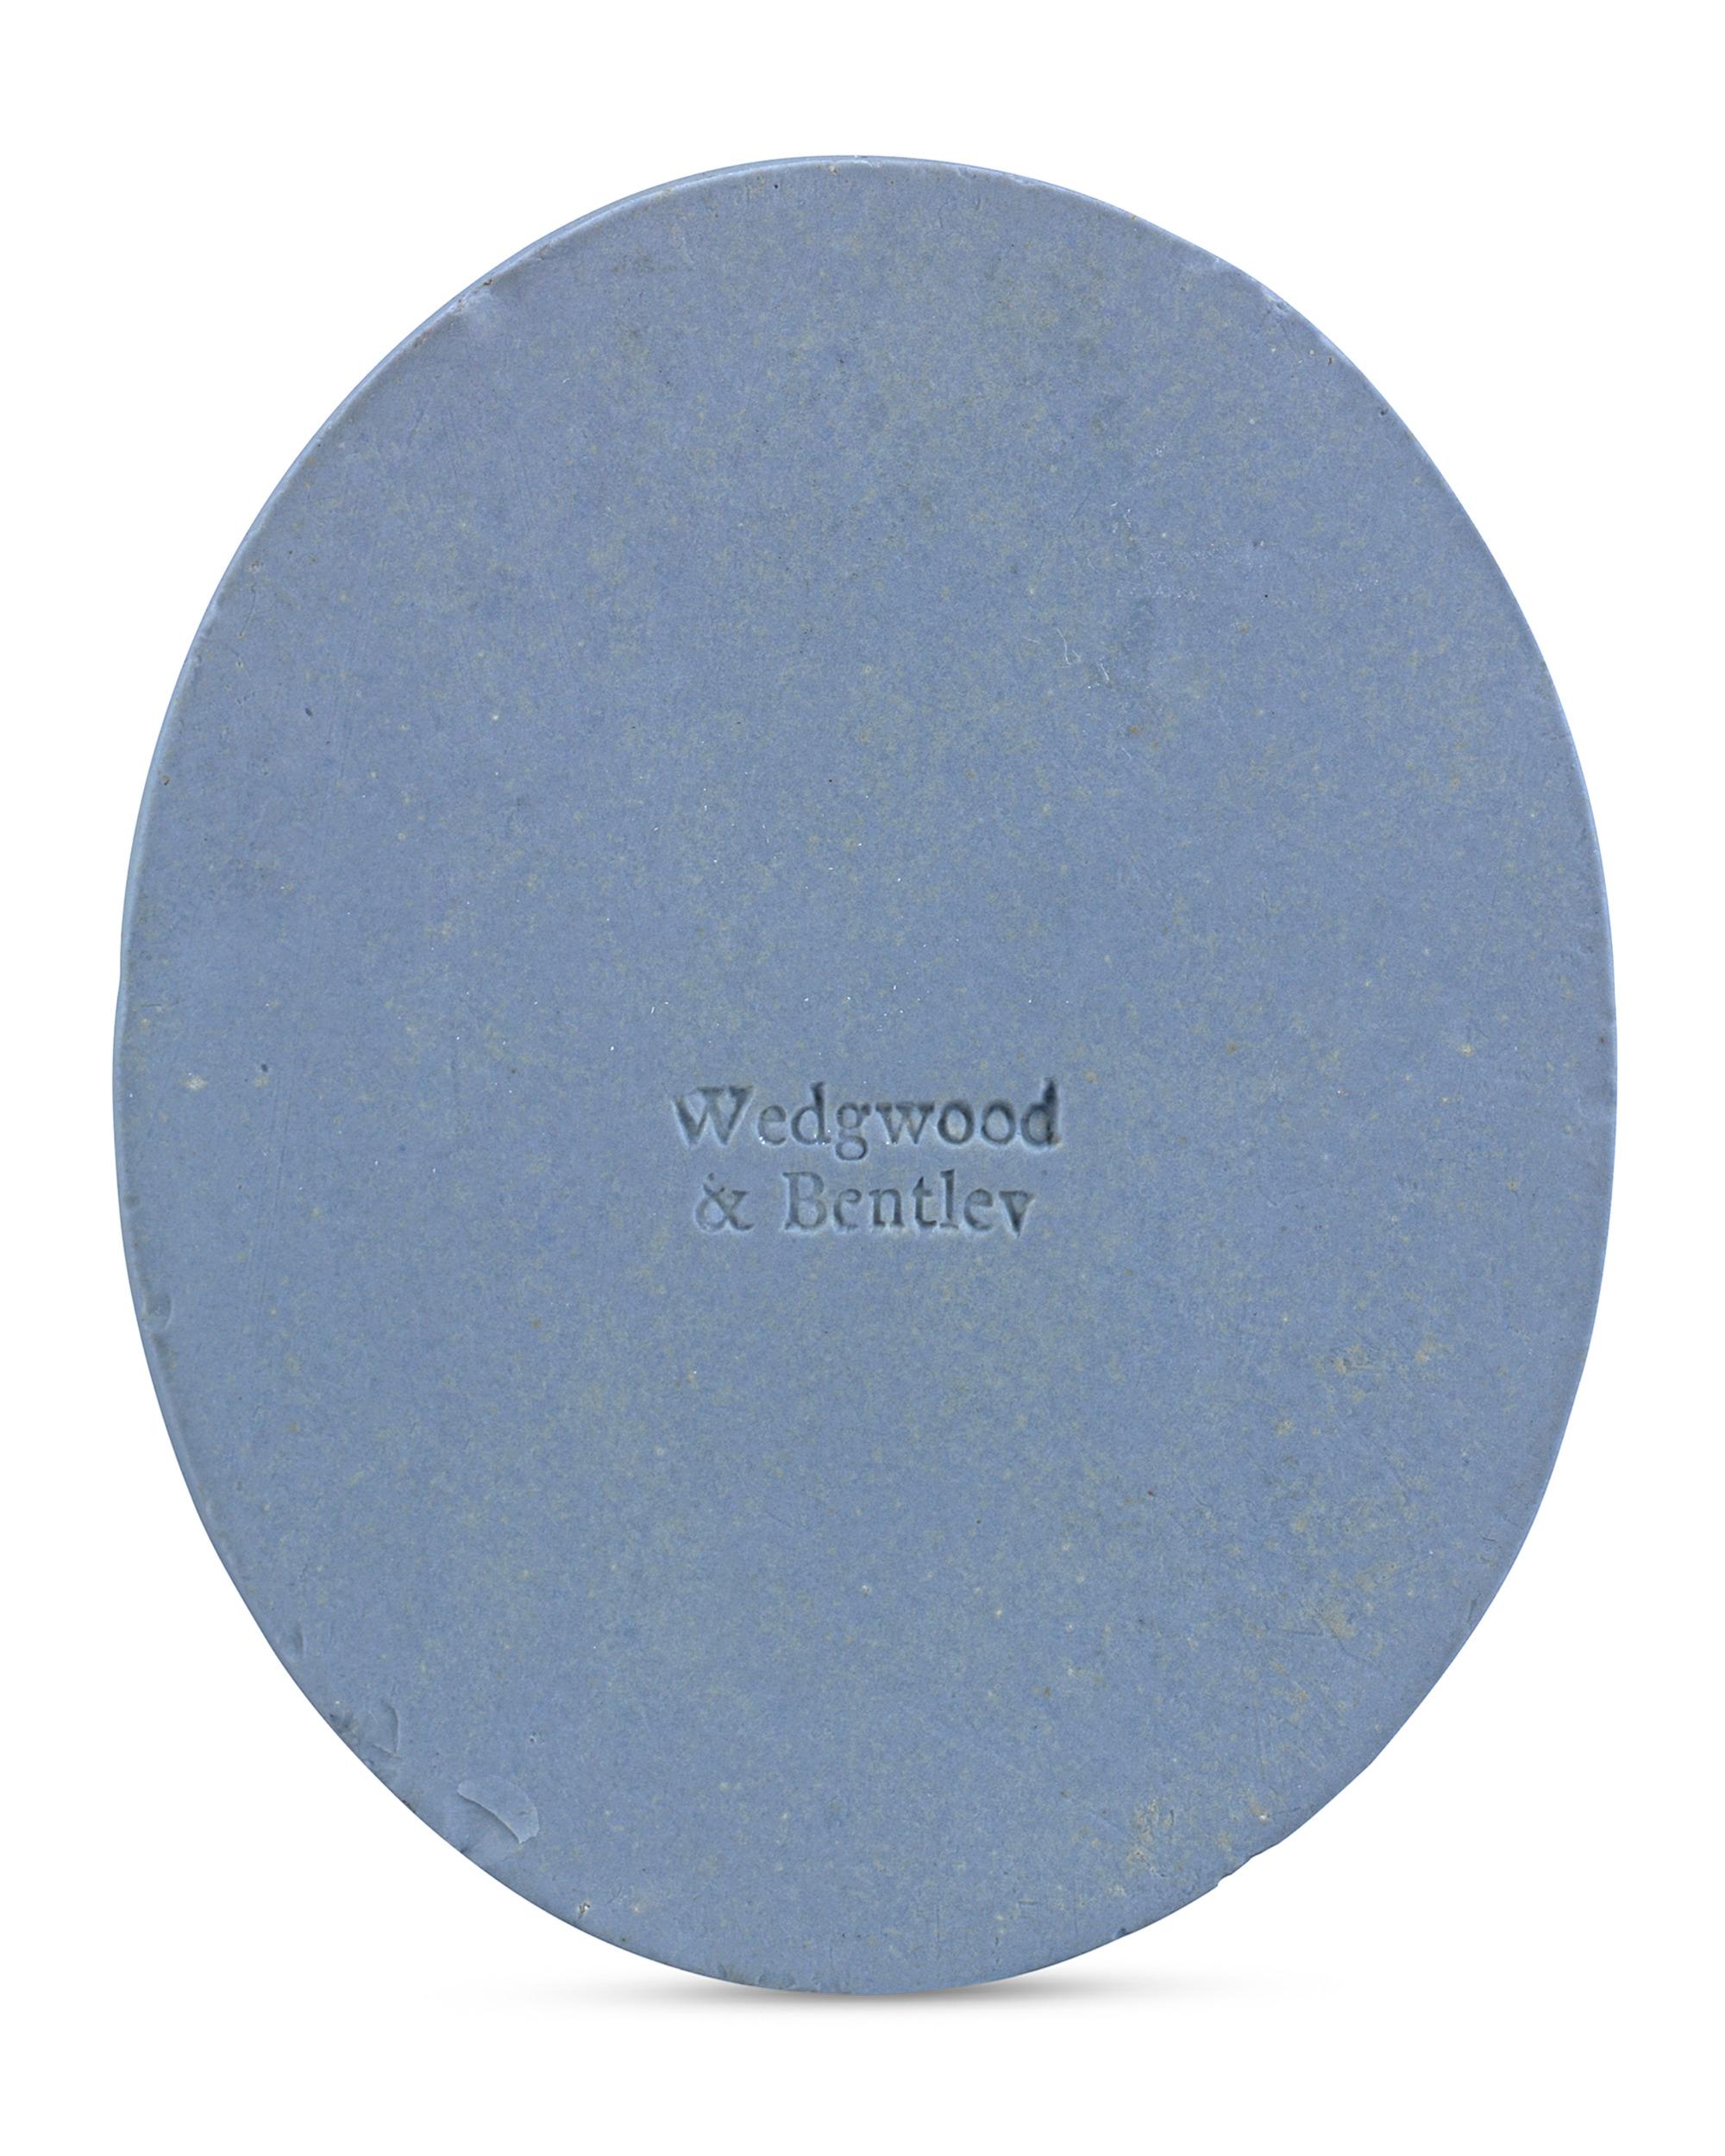 English Wedgwood & Bentley Jasperware Portrait Medallion Of Rousseau For Sale